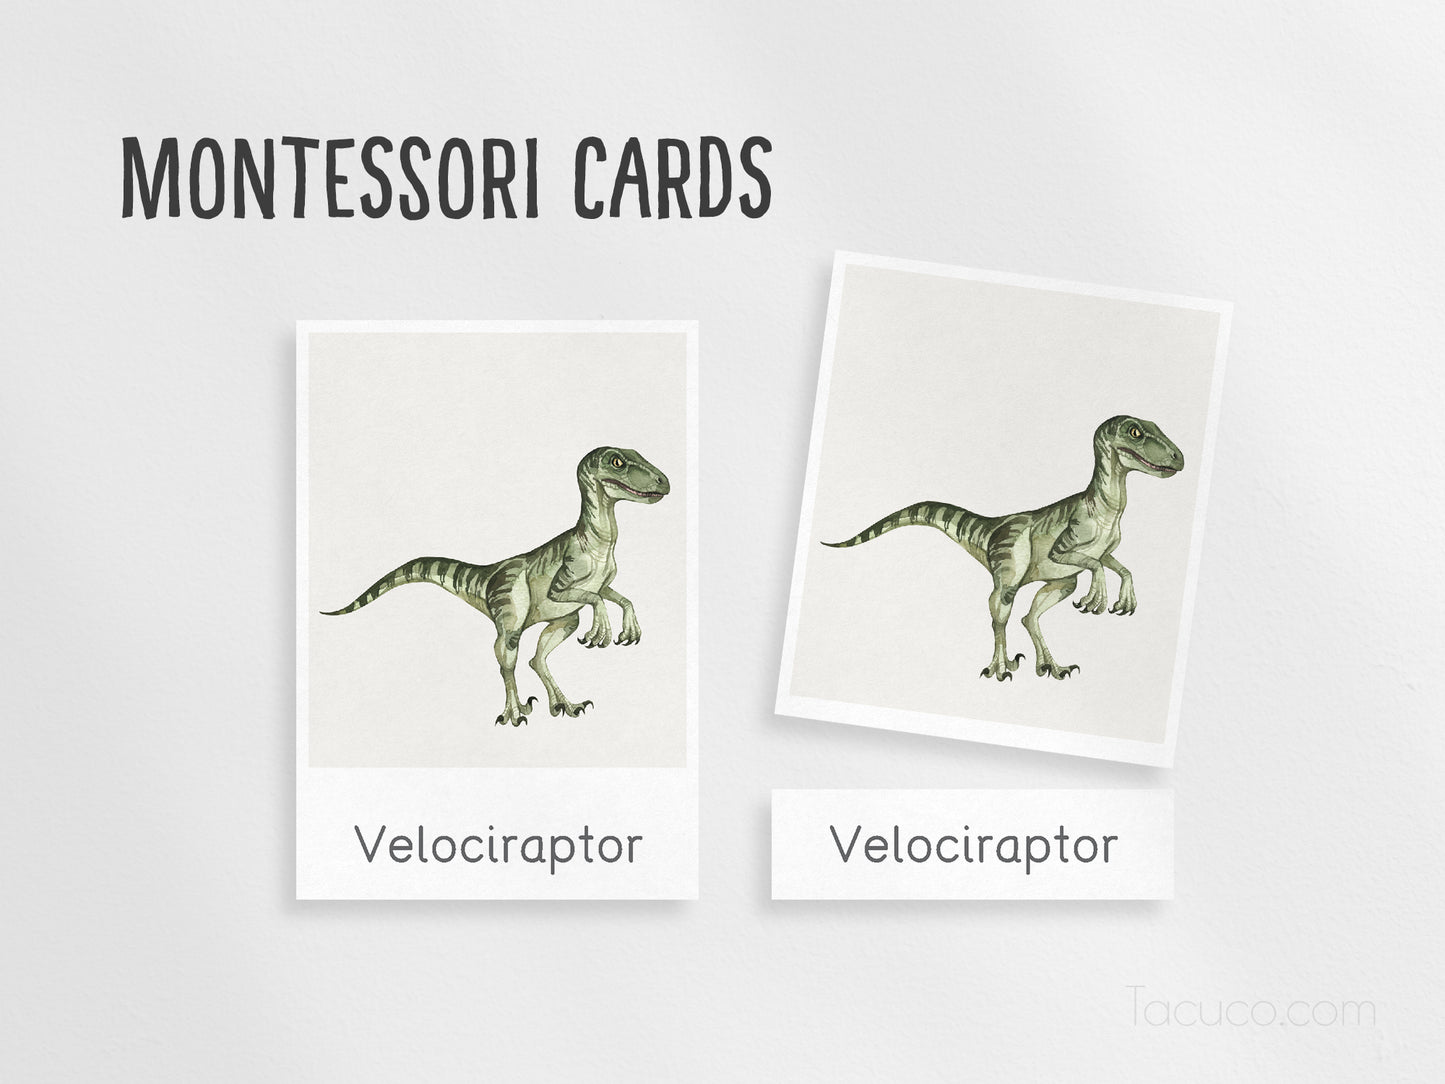 Dinosaur flashcards